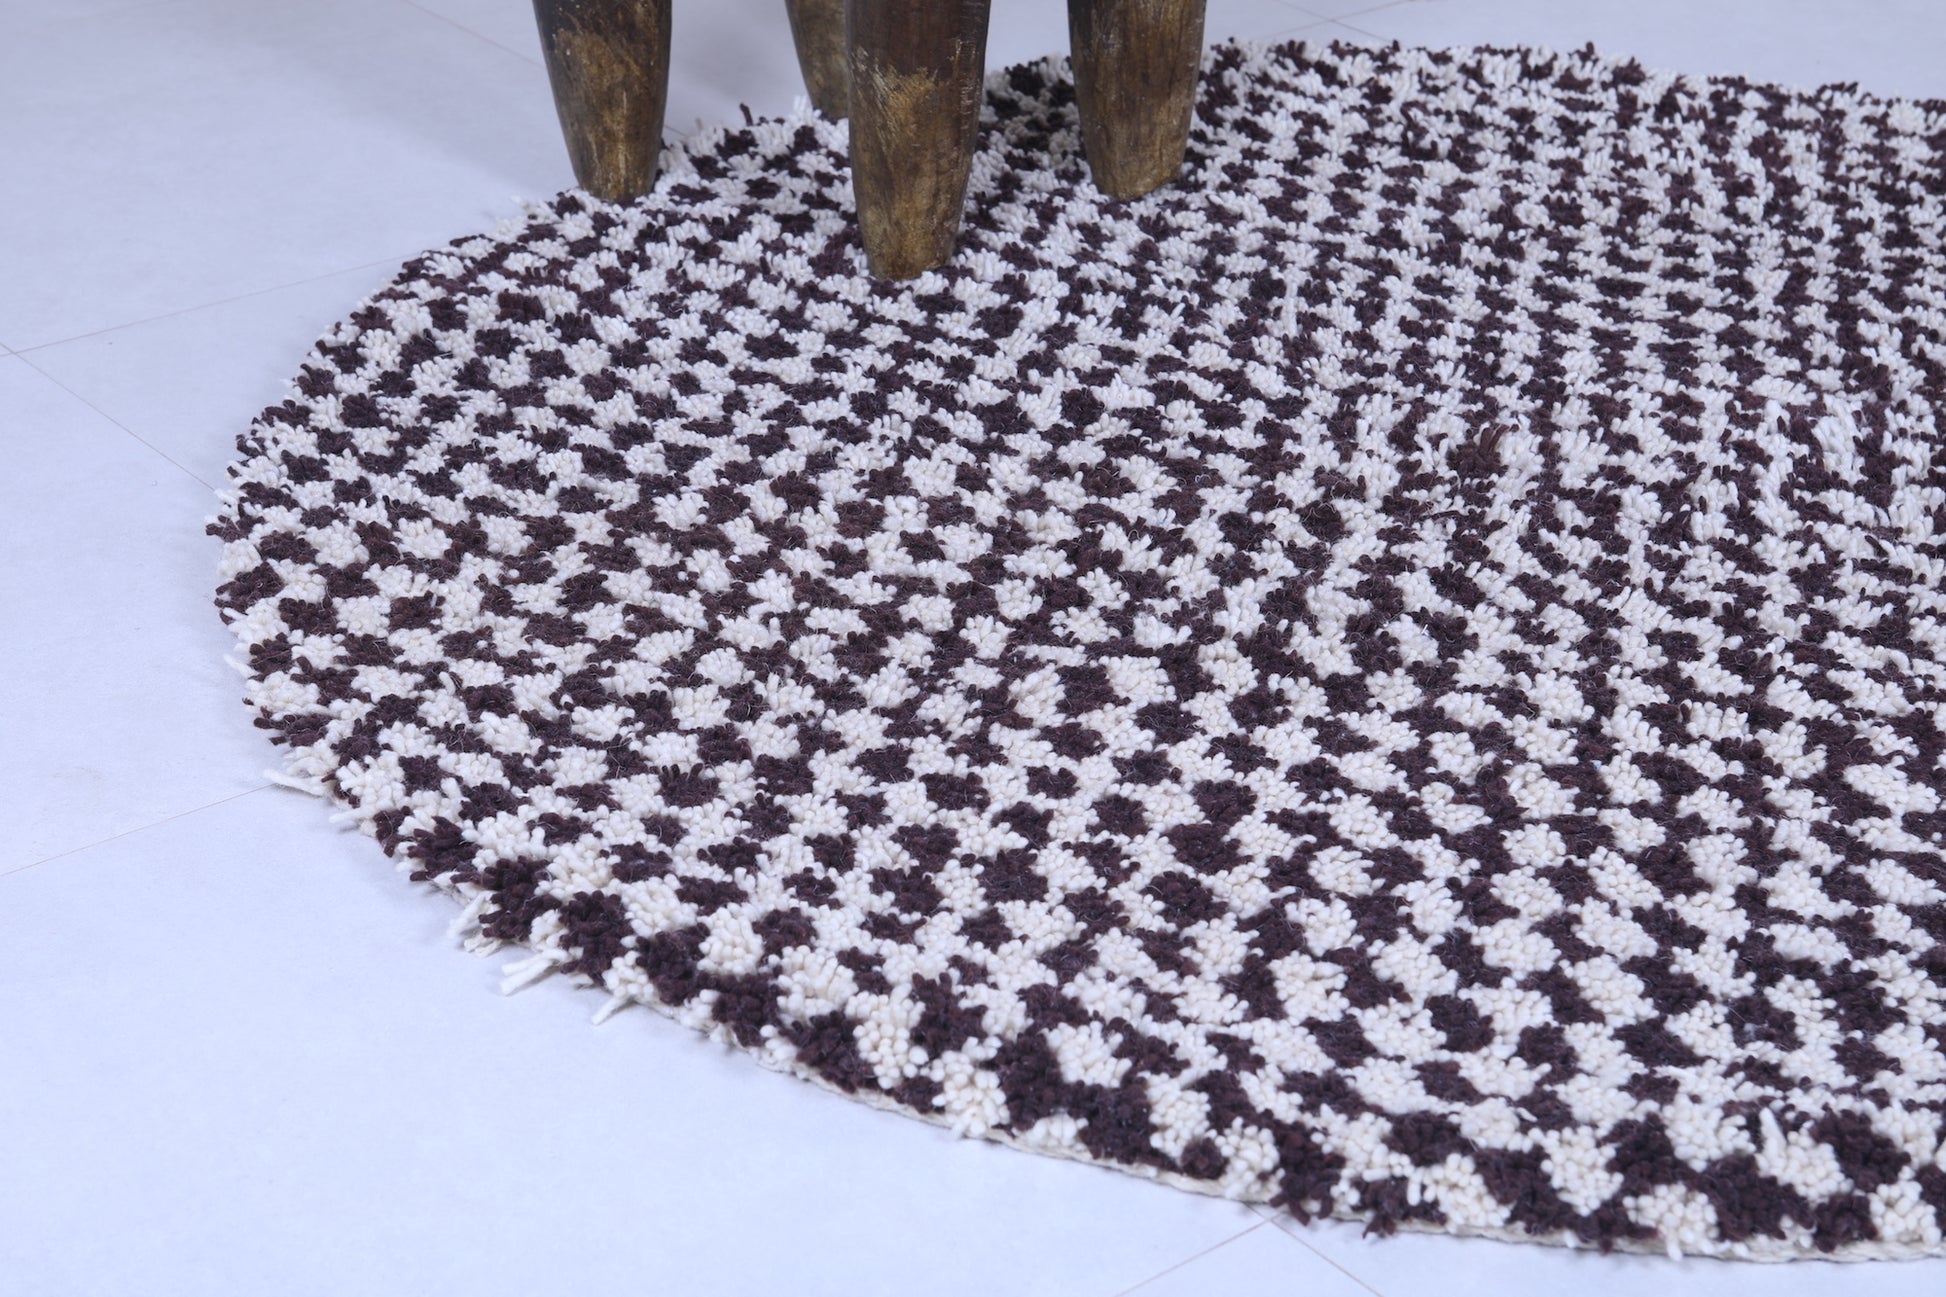 Round Moroccan wool 5 Feet - Beni ourain rugs